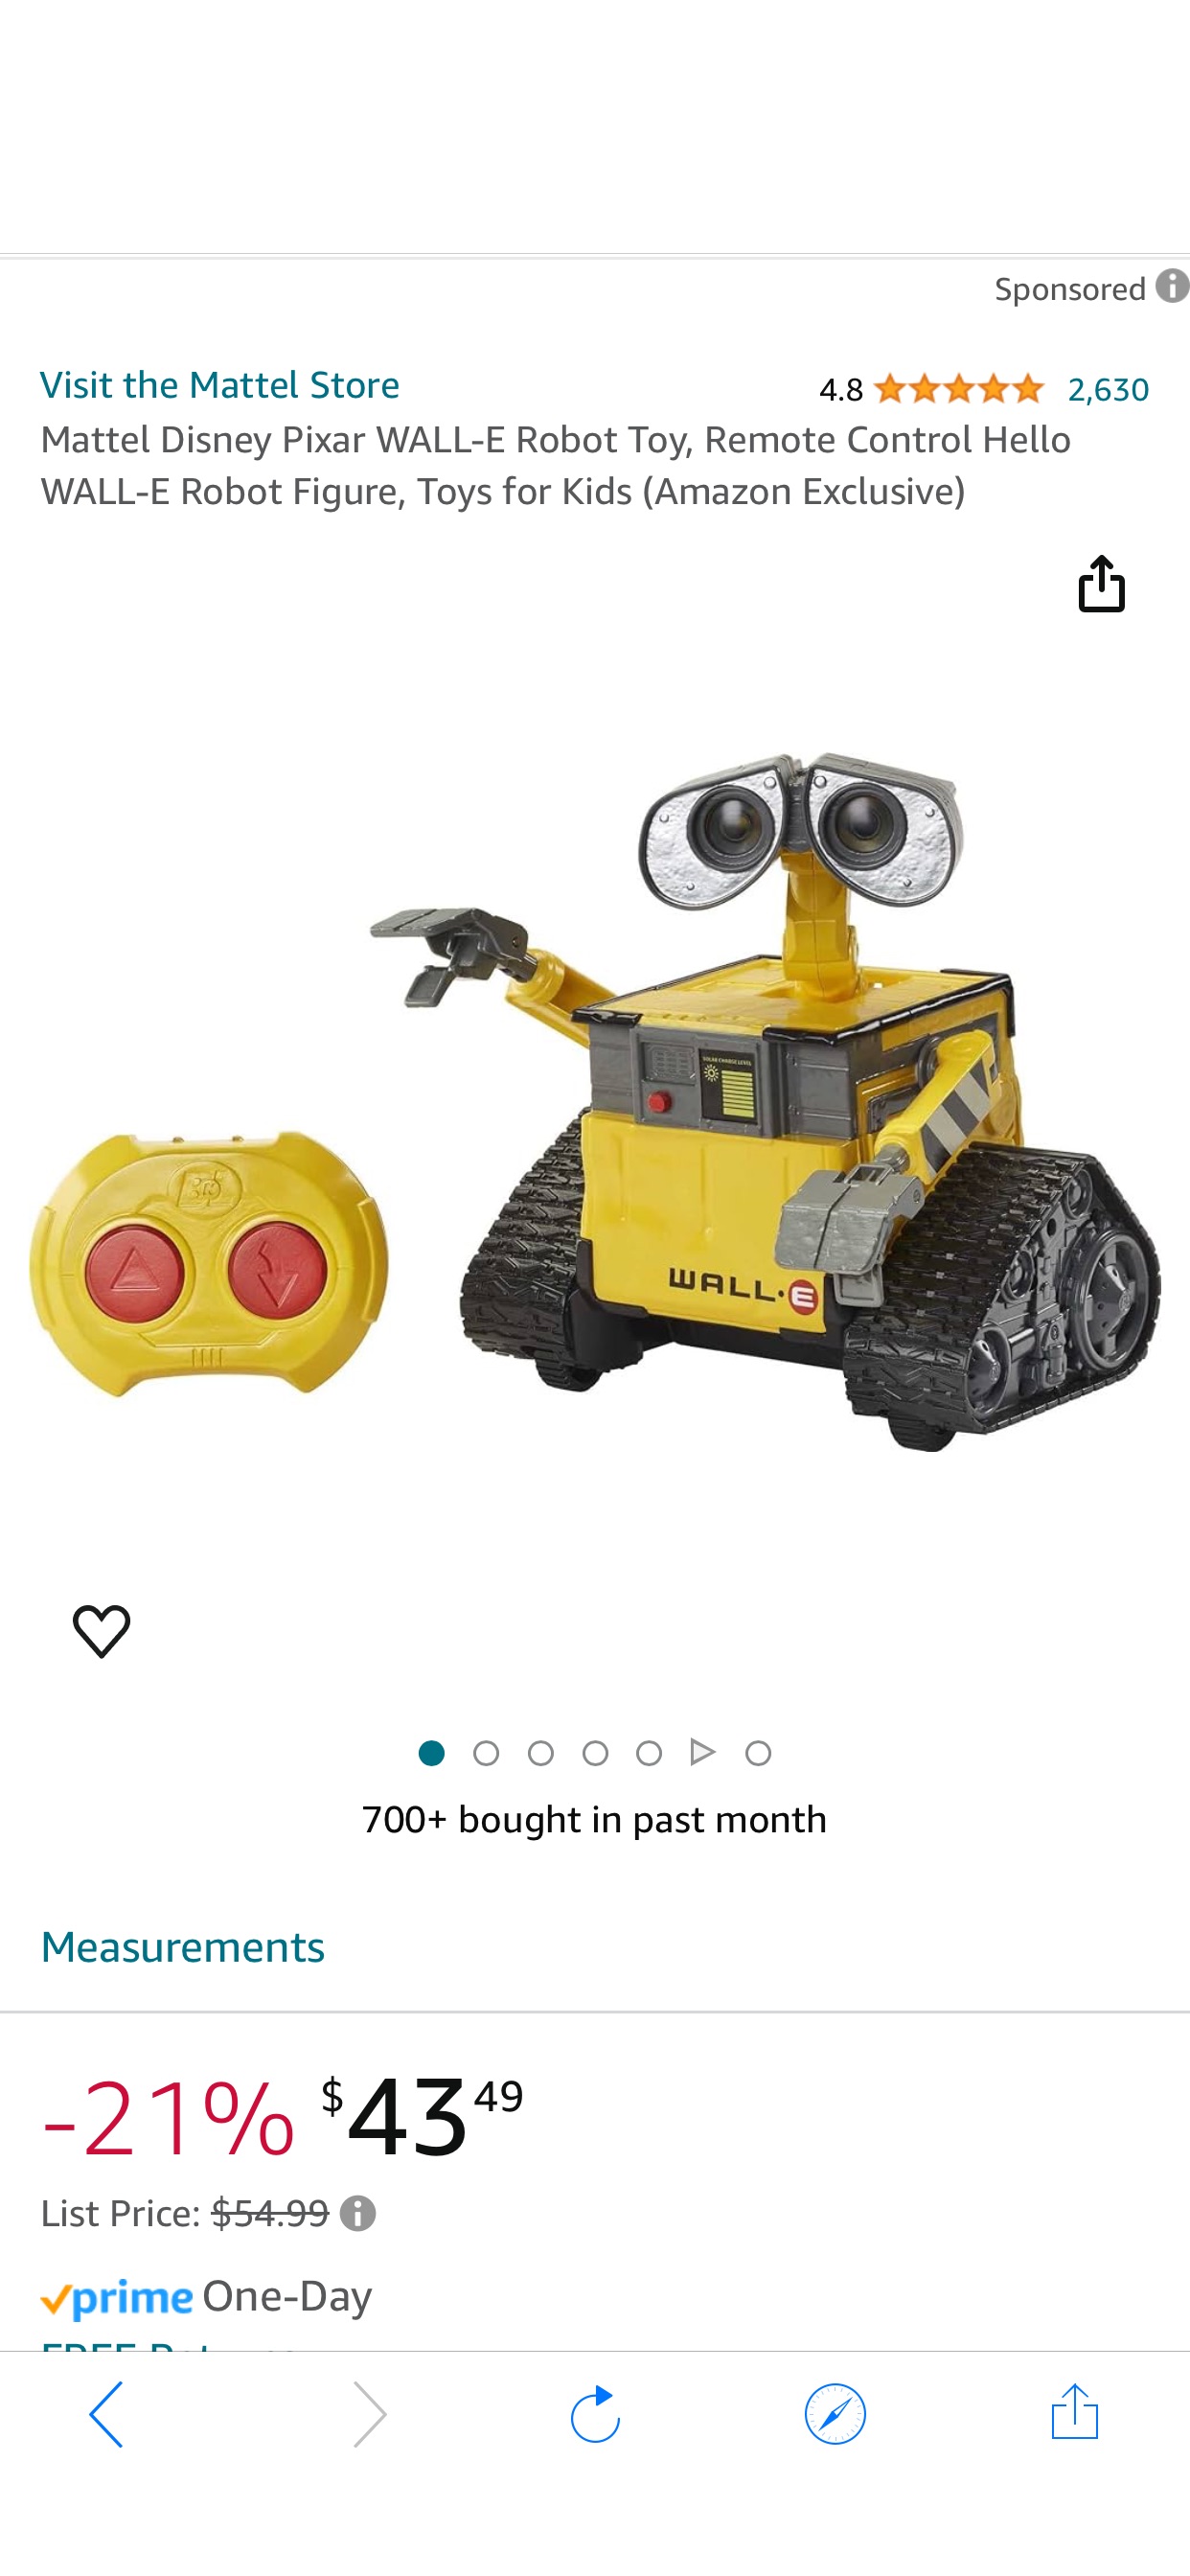 Amazon.com: Mattel Disney Pixar WALL-E Robot Toy, Remote Control Hello WALL-E Robot Figure, Toys for Kids (Amazon Exclusive) : Toys & Games 遥控玩具 瓦力